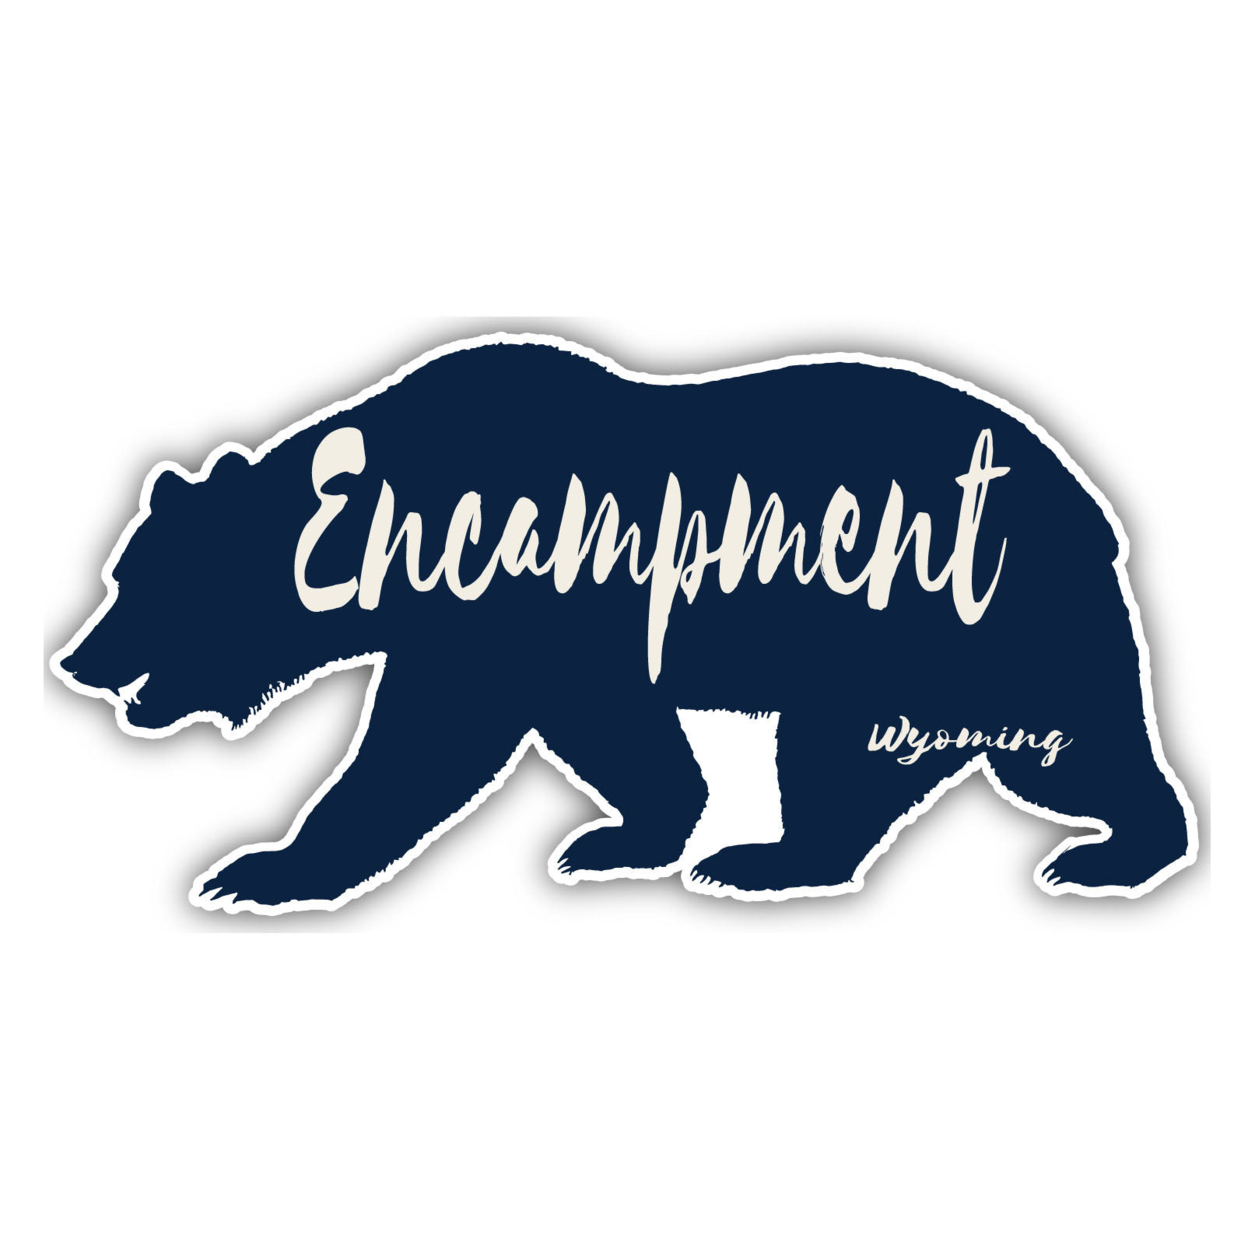 Encampment Wyoming Souvenir Decorative Stickers (Choose Theme And Size) - Single Unit, 6-Inch, Bear